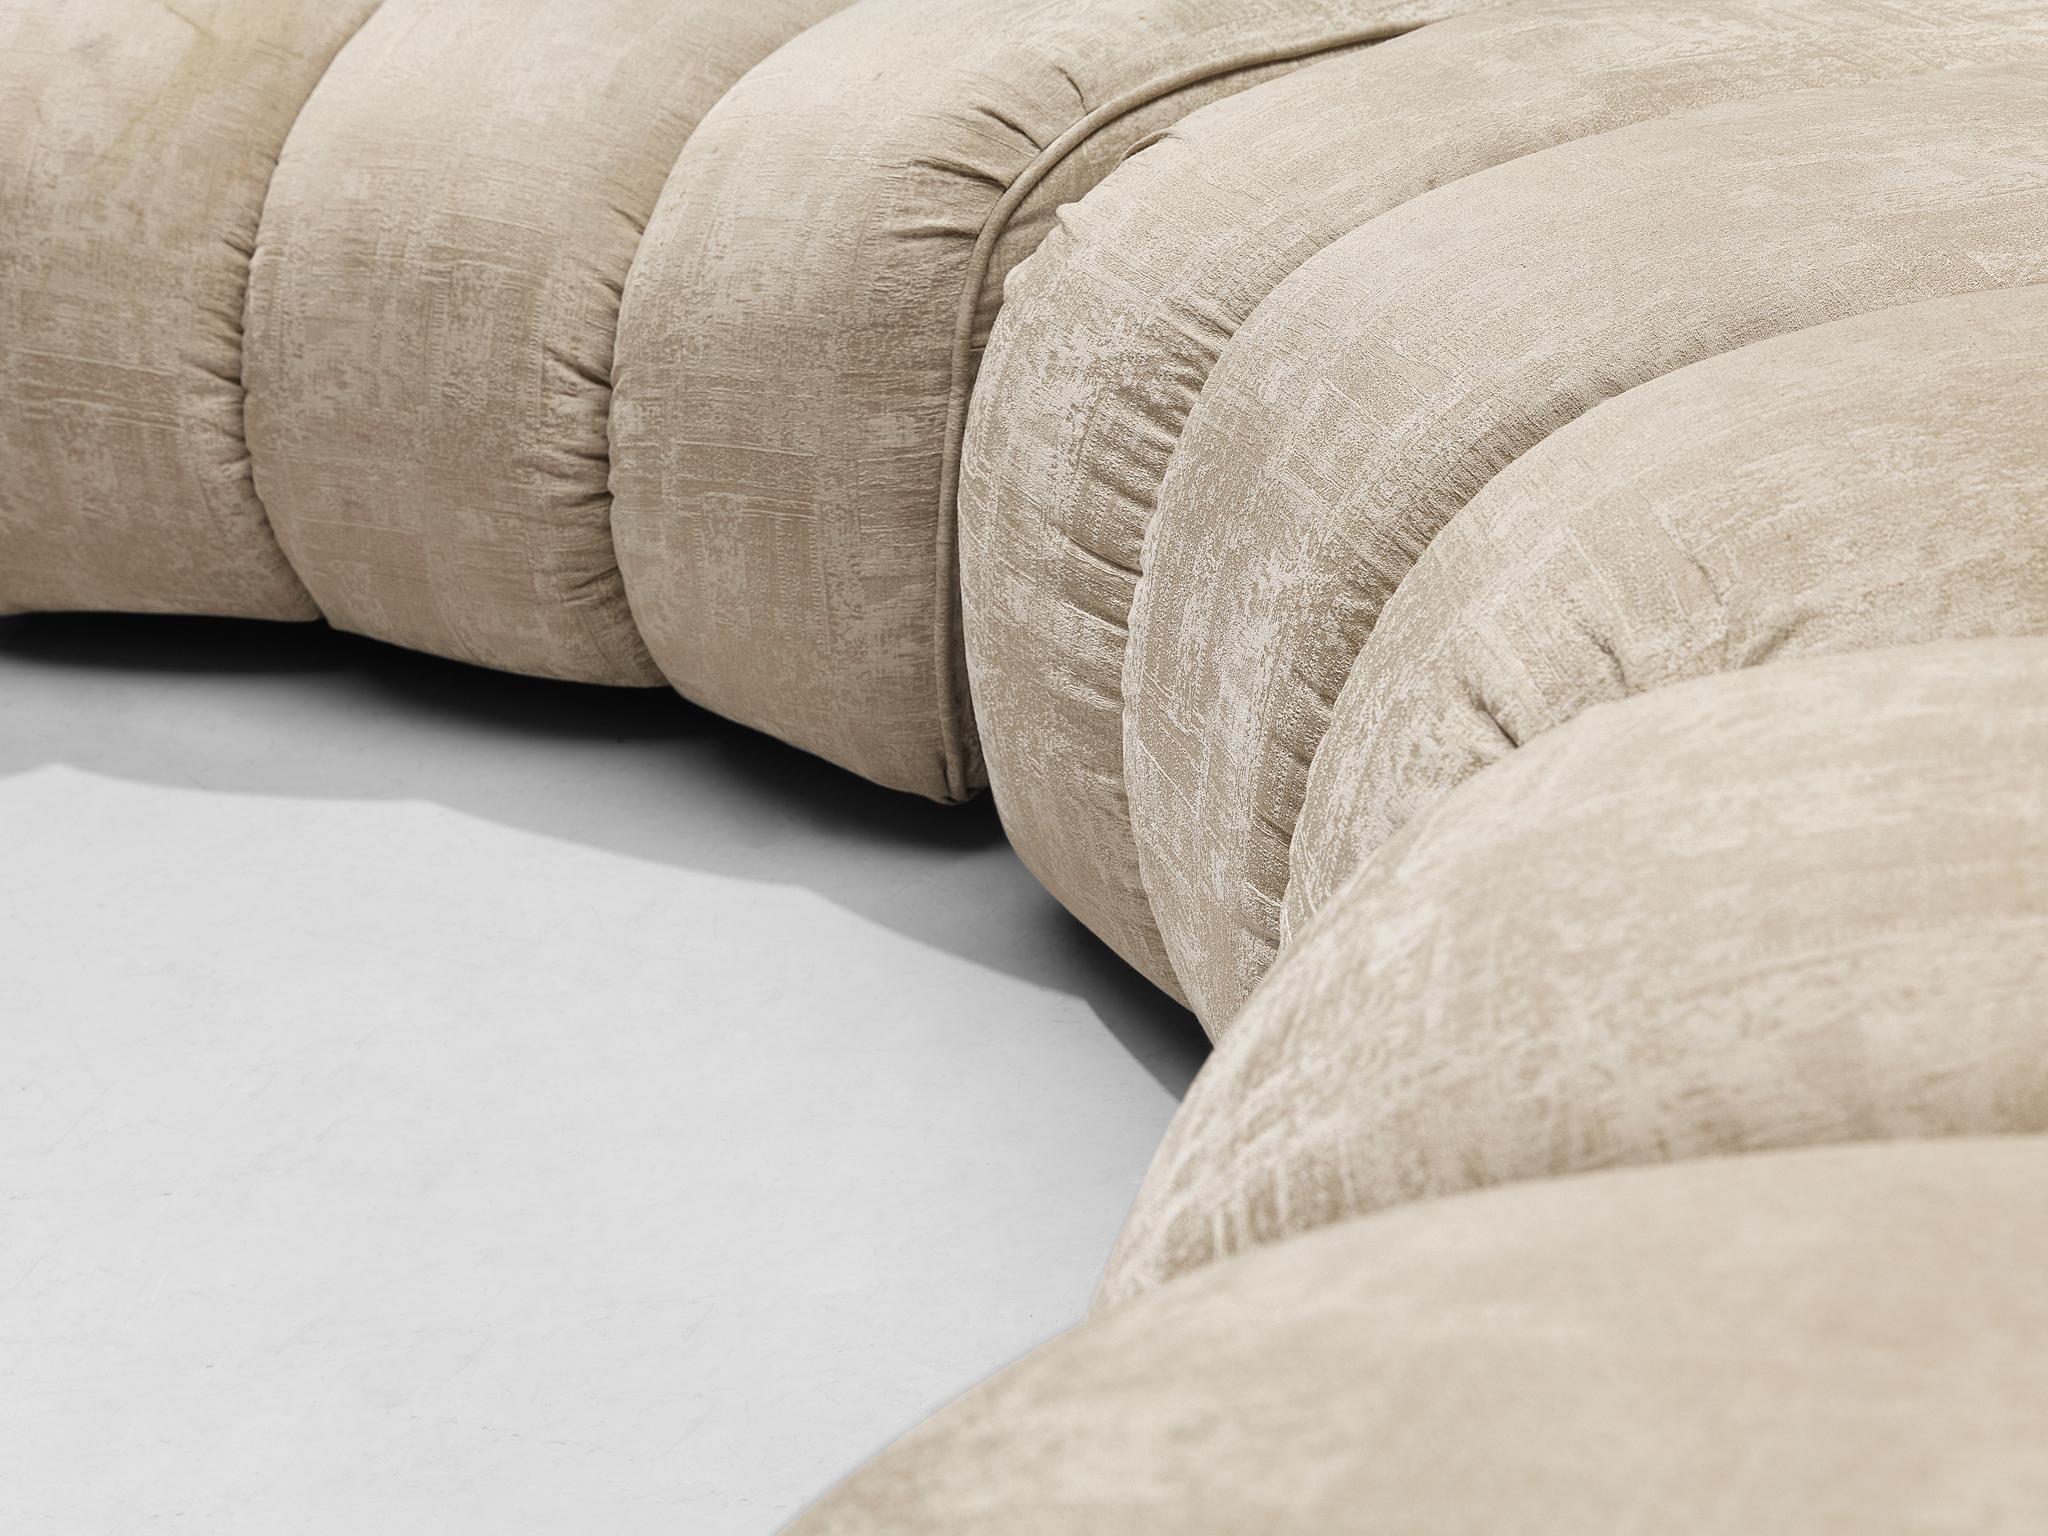 Late 20th Century Modular 'Caterpillar' Sofa in Cream Upholstery